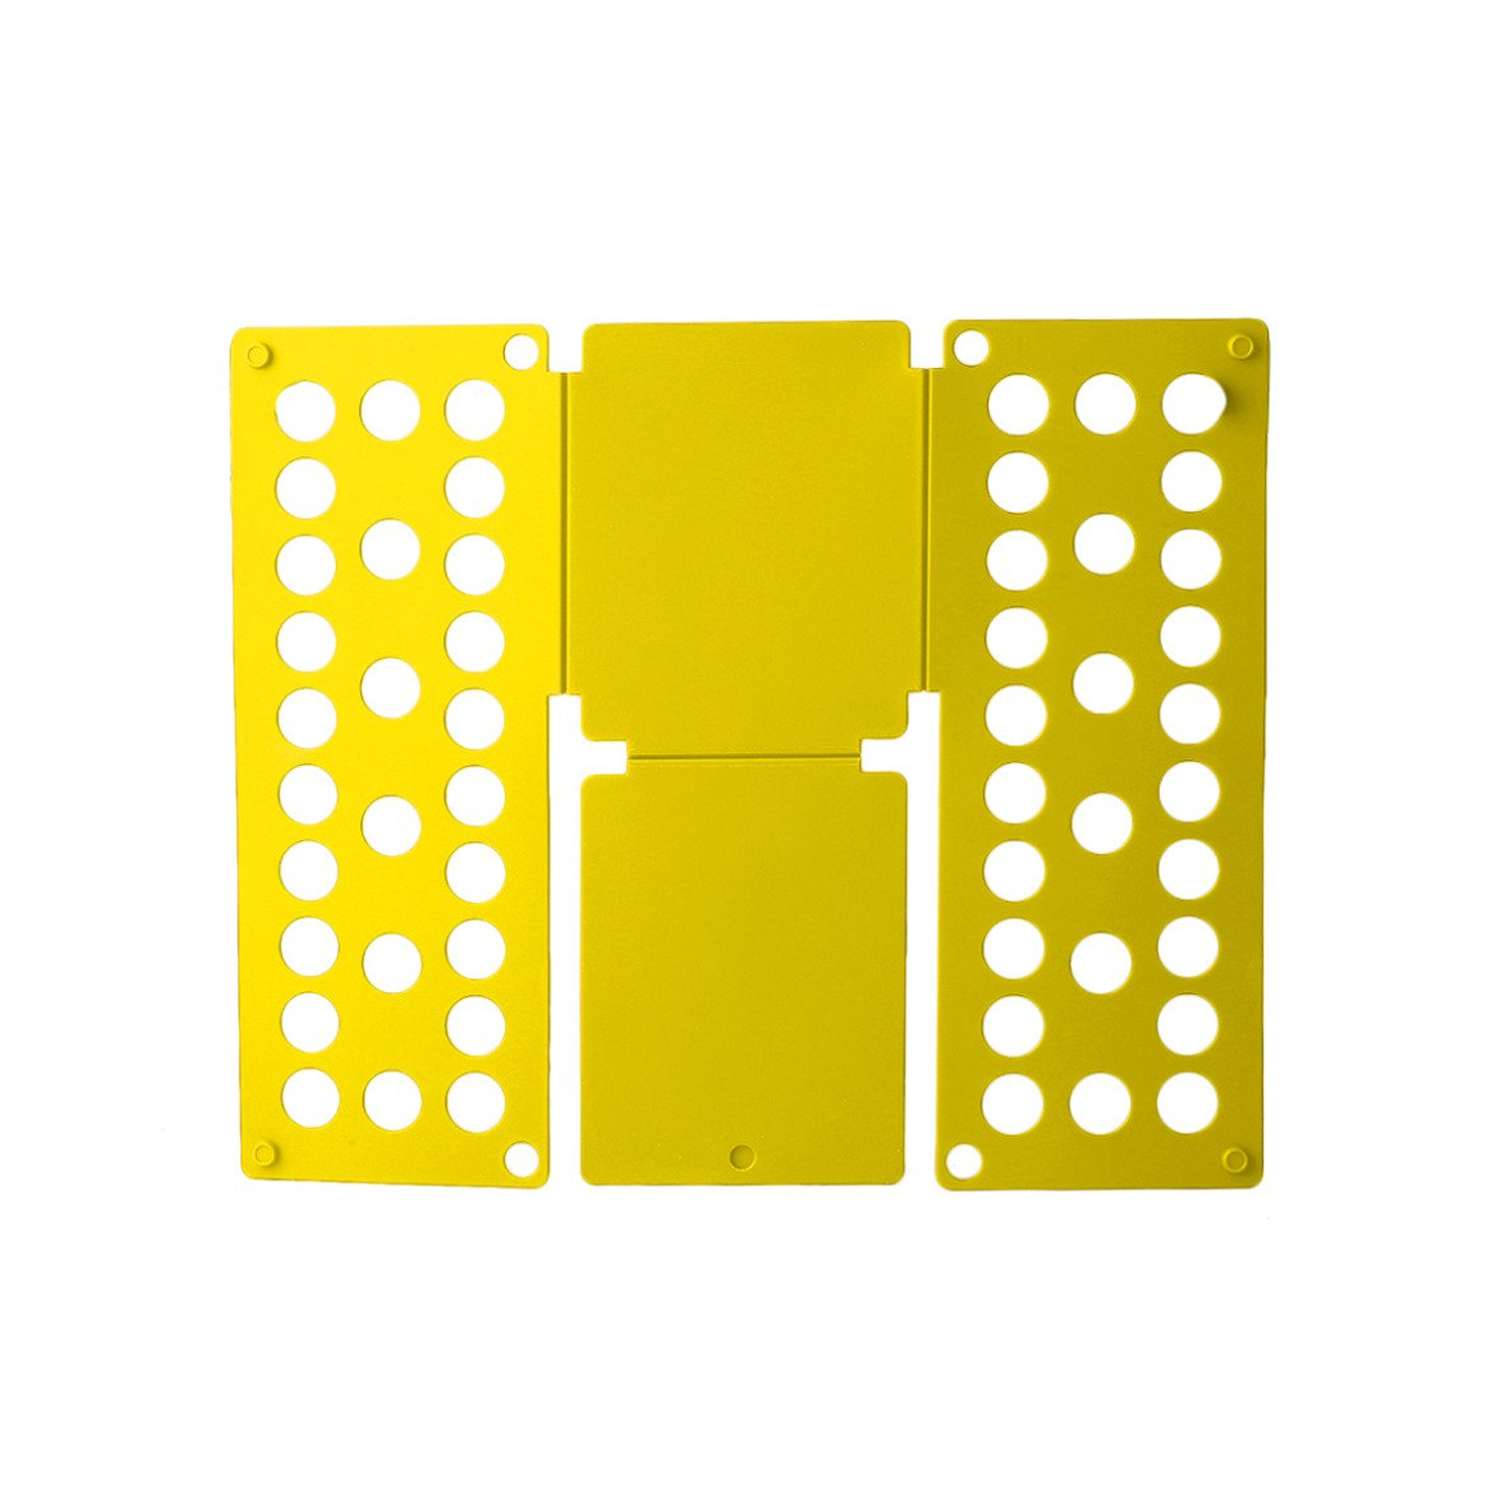 Рамка для складывания одежды Rabizy желтый 67х59 см - фото 1